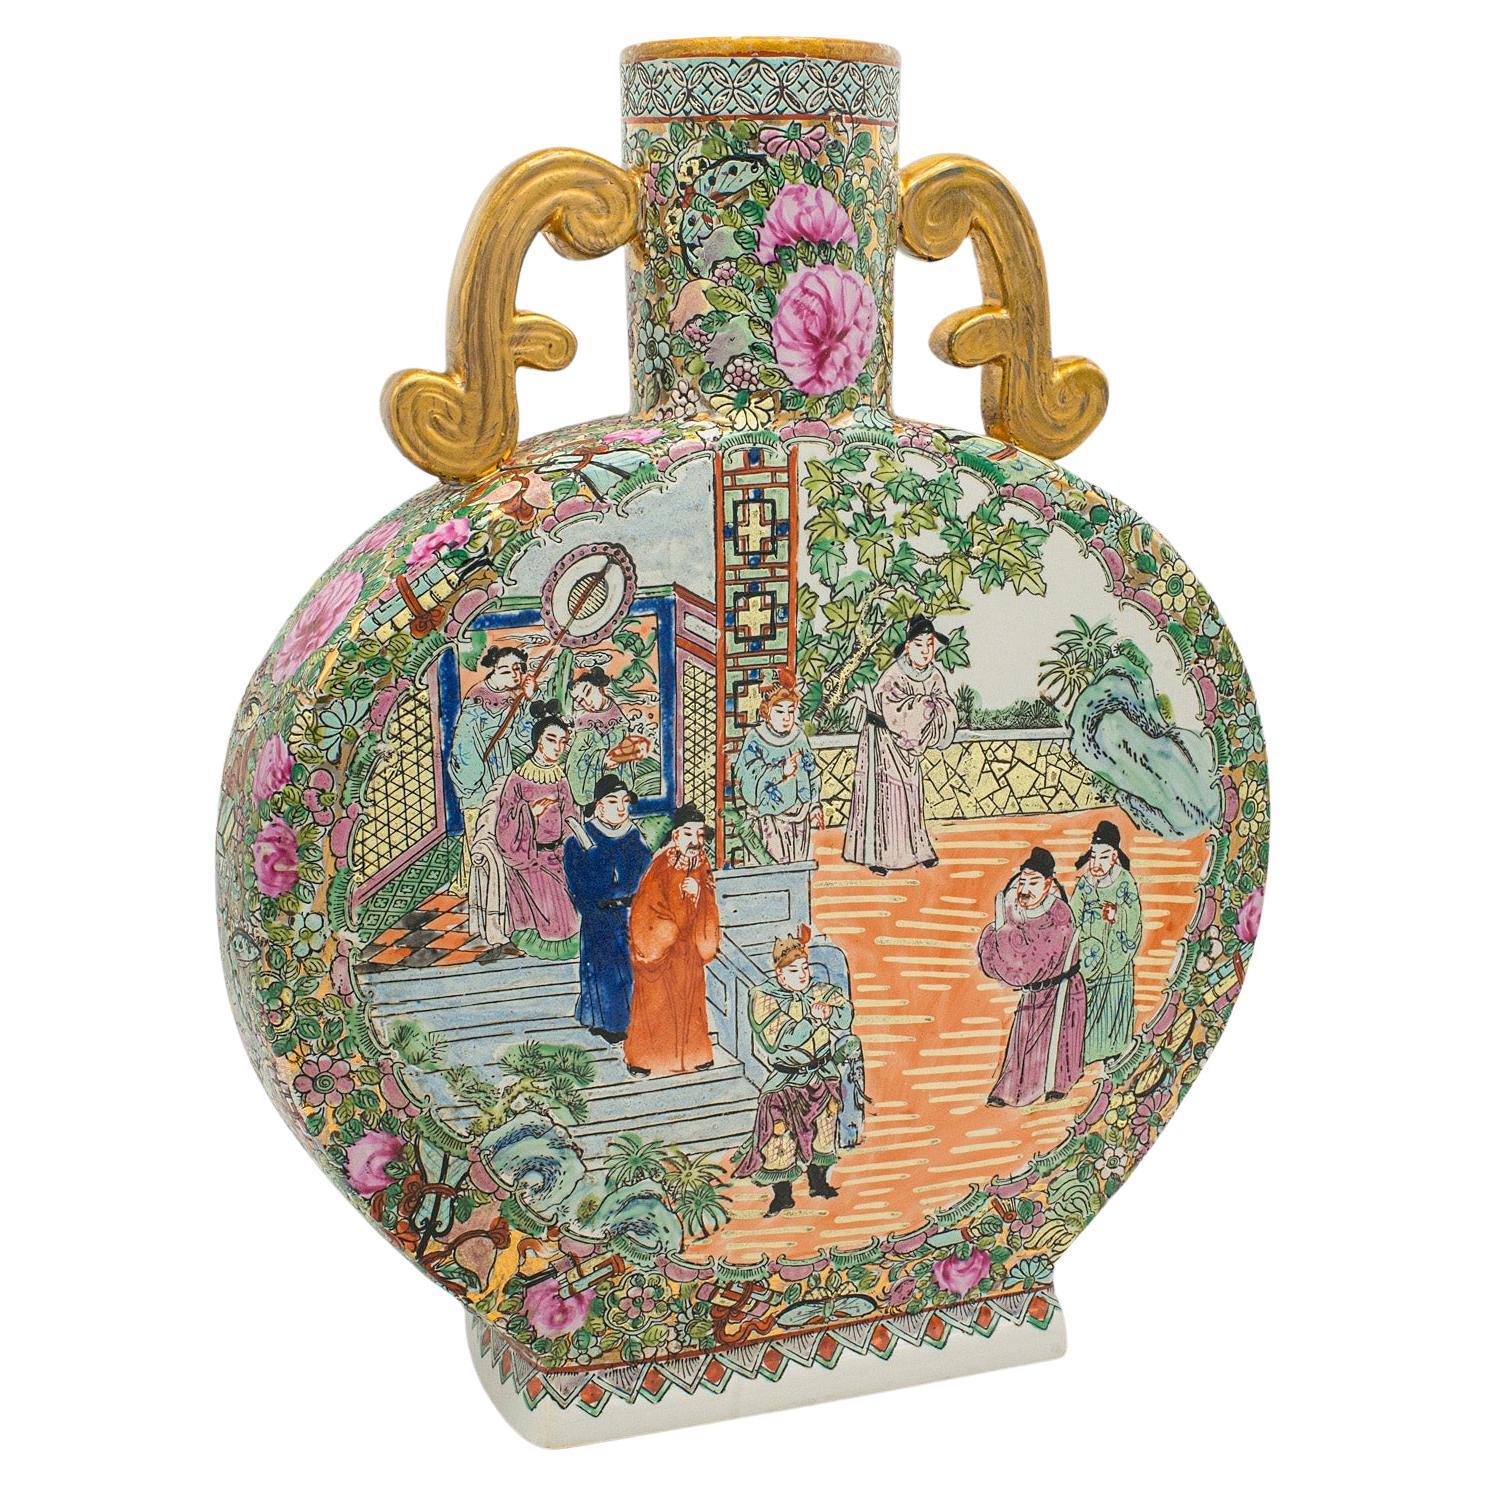 Large Antique Moon Vase, Chinese Ceramic, Decorative Flower Urn, Victorian, Qing